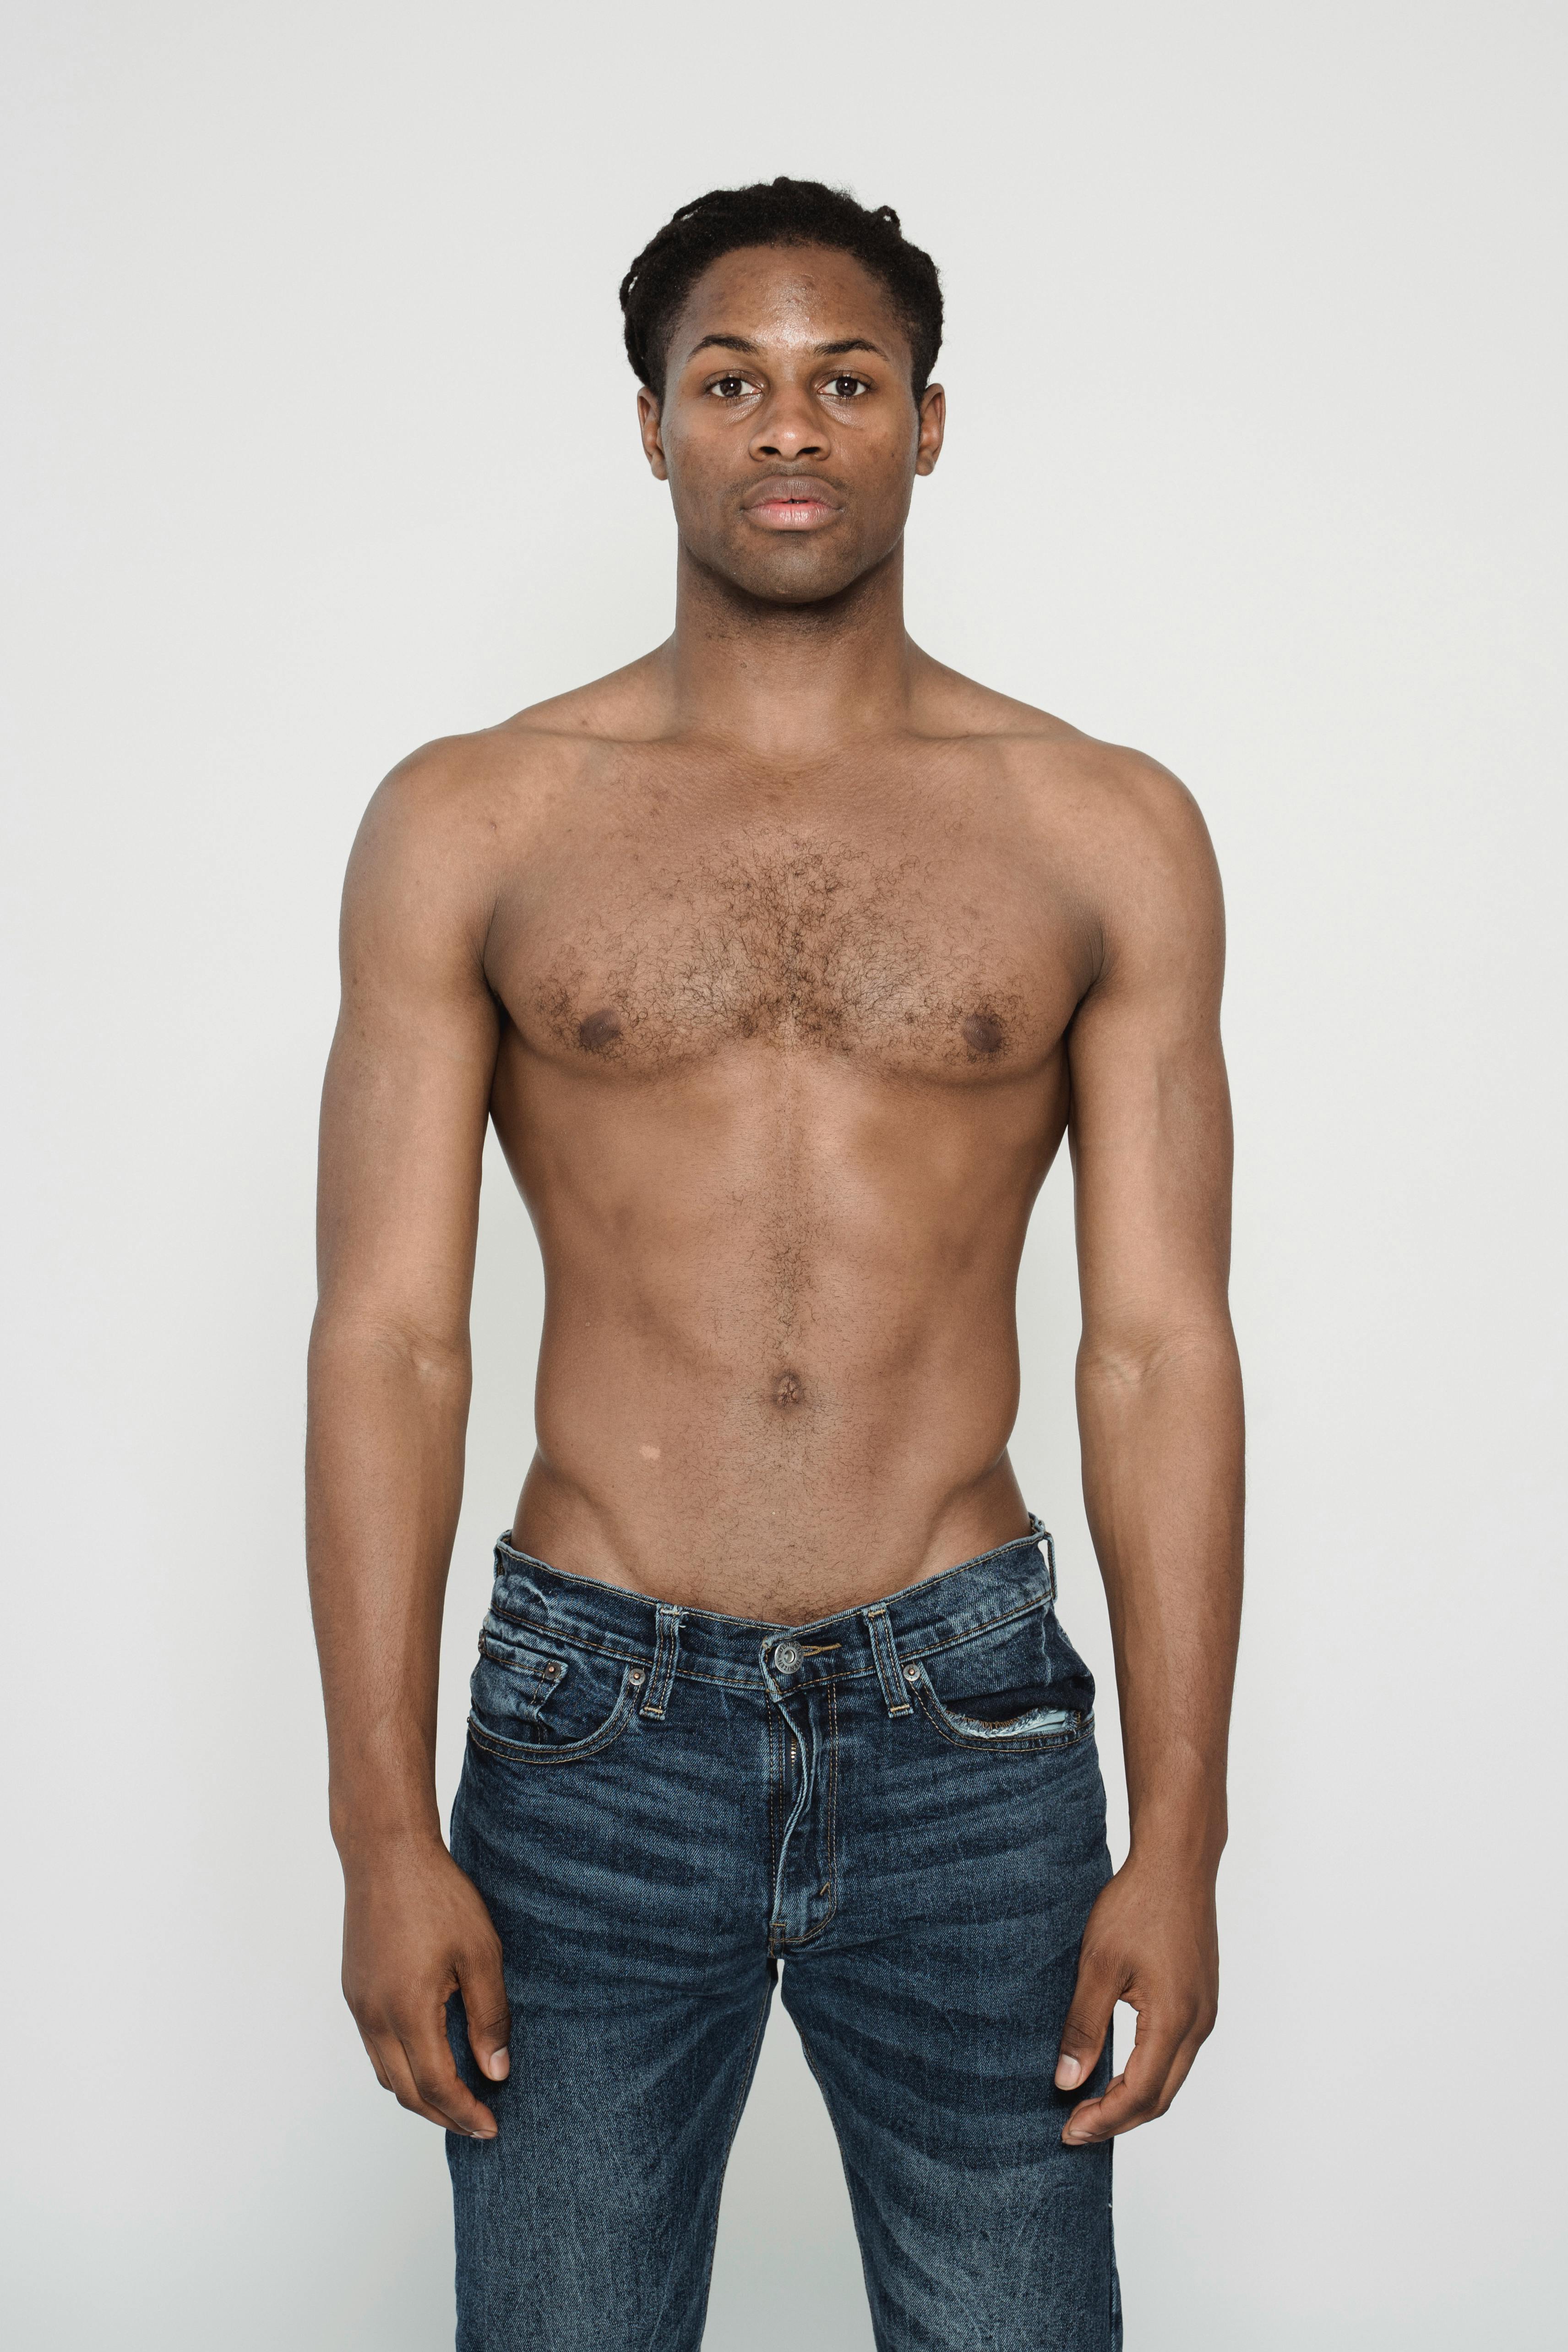 Shirtless Men With Black Background · Free Stock Photo